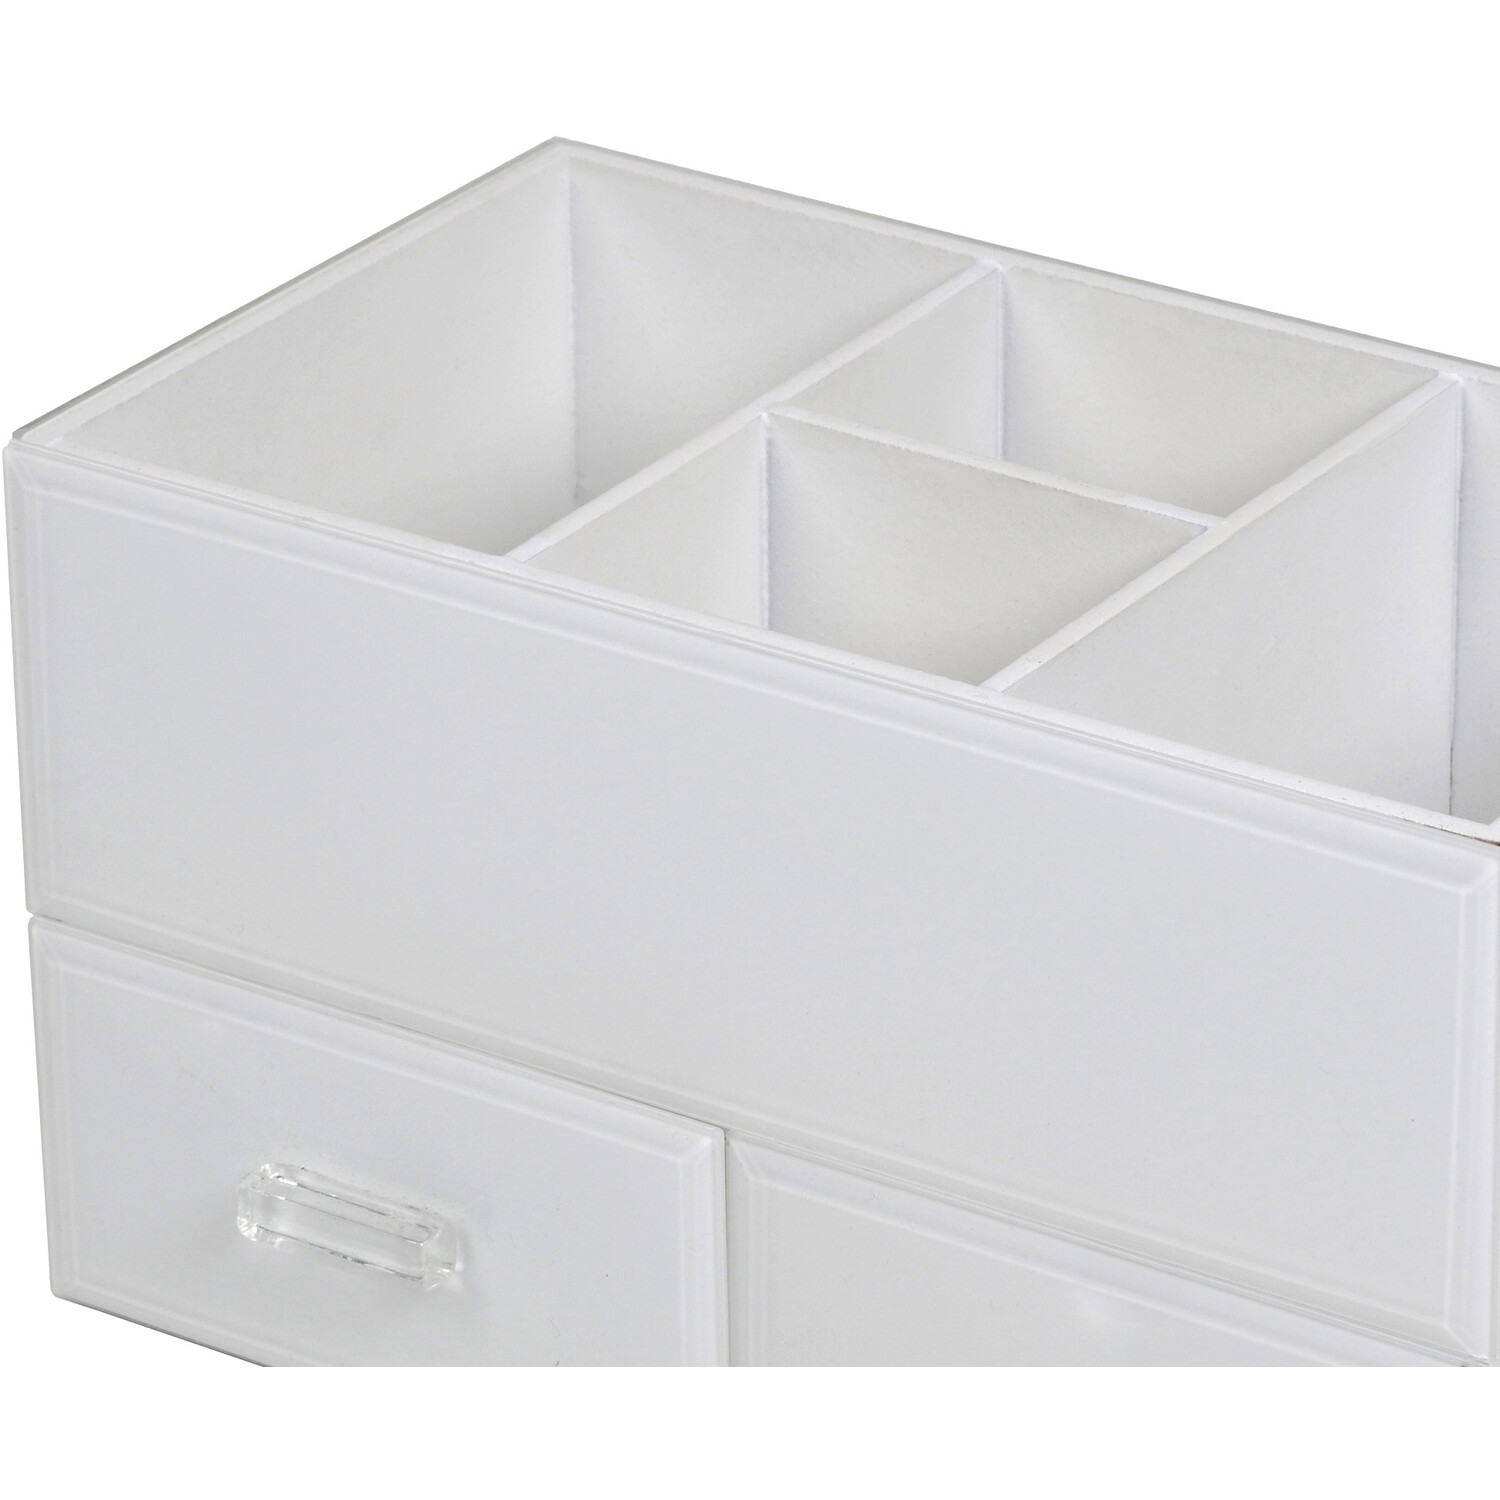 White 2 Drawer Glass Cosmetic Box Image 3